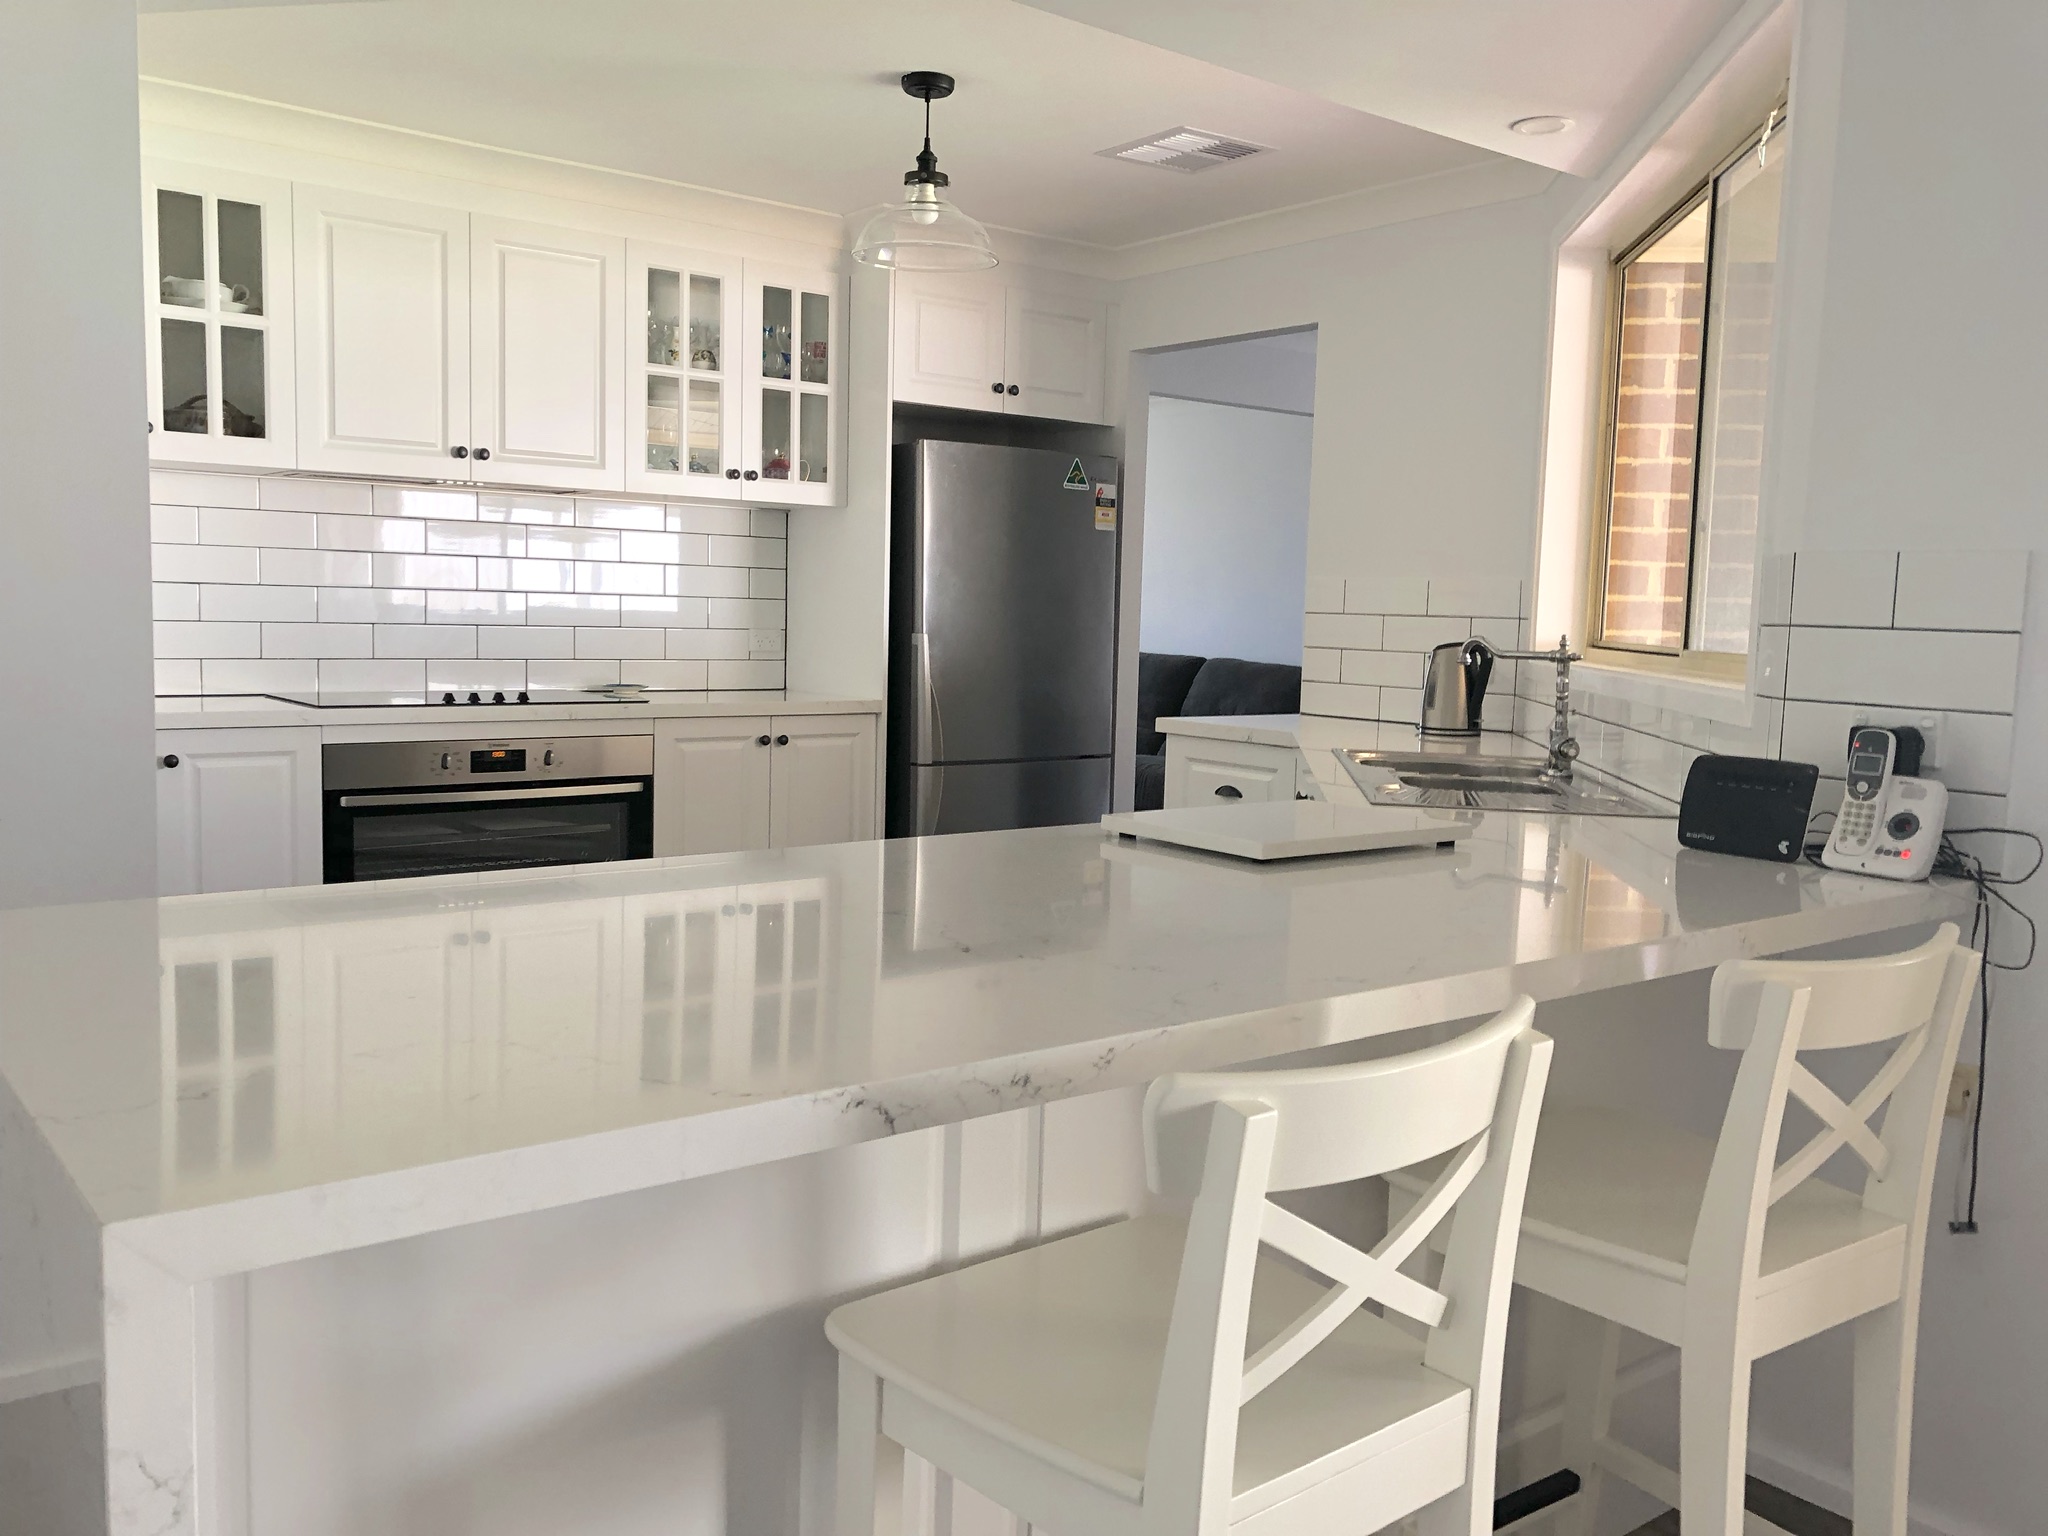 Timeless white Hamptons style kitchen - kitchen renovation by Master Bathrooms & Kitchens